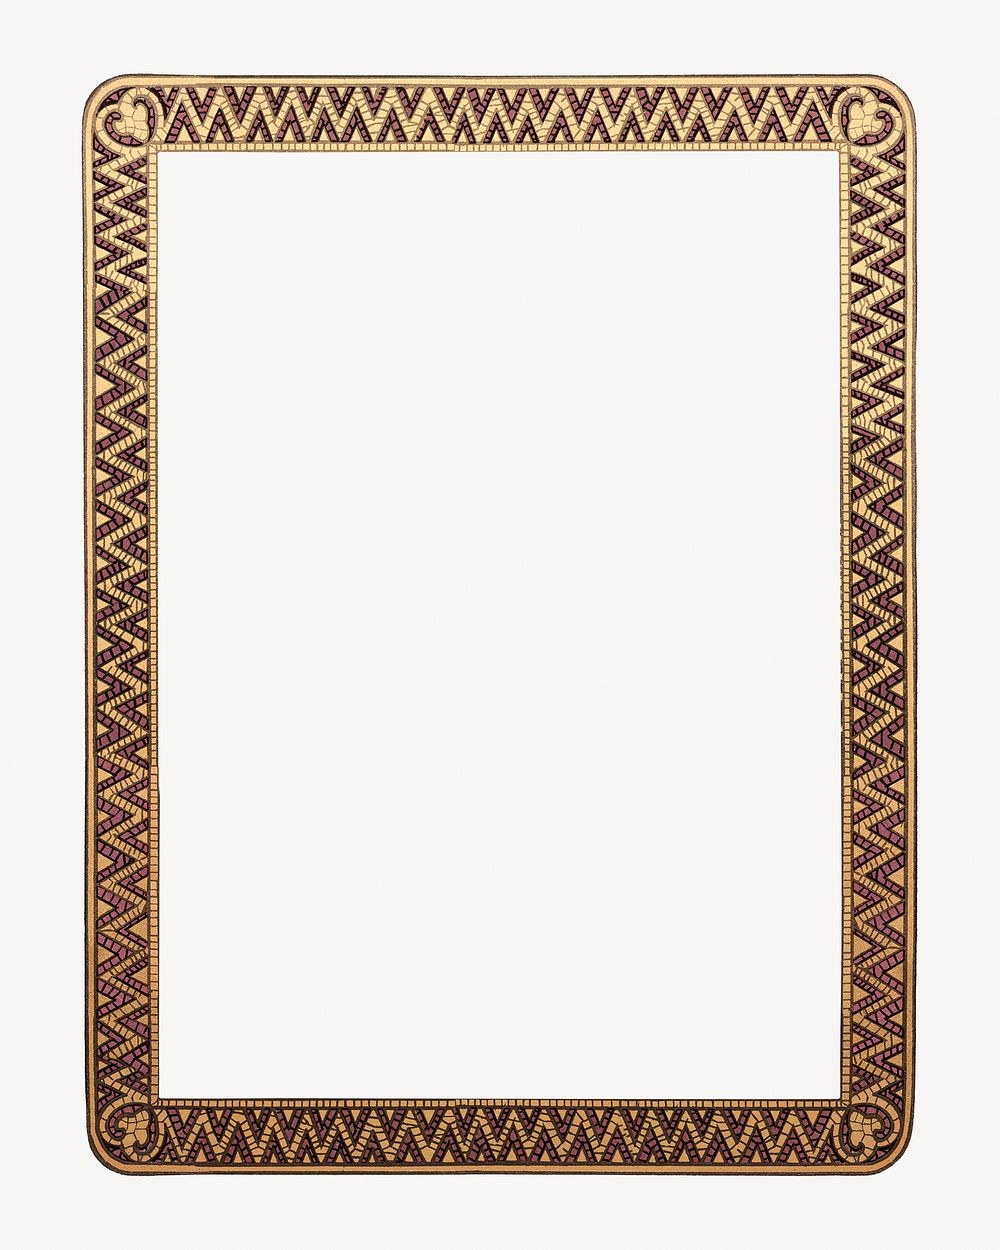 Alphonse Mucha's gold frame, vintage art deco